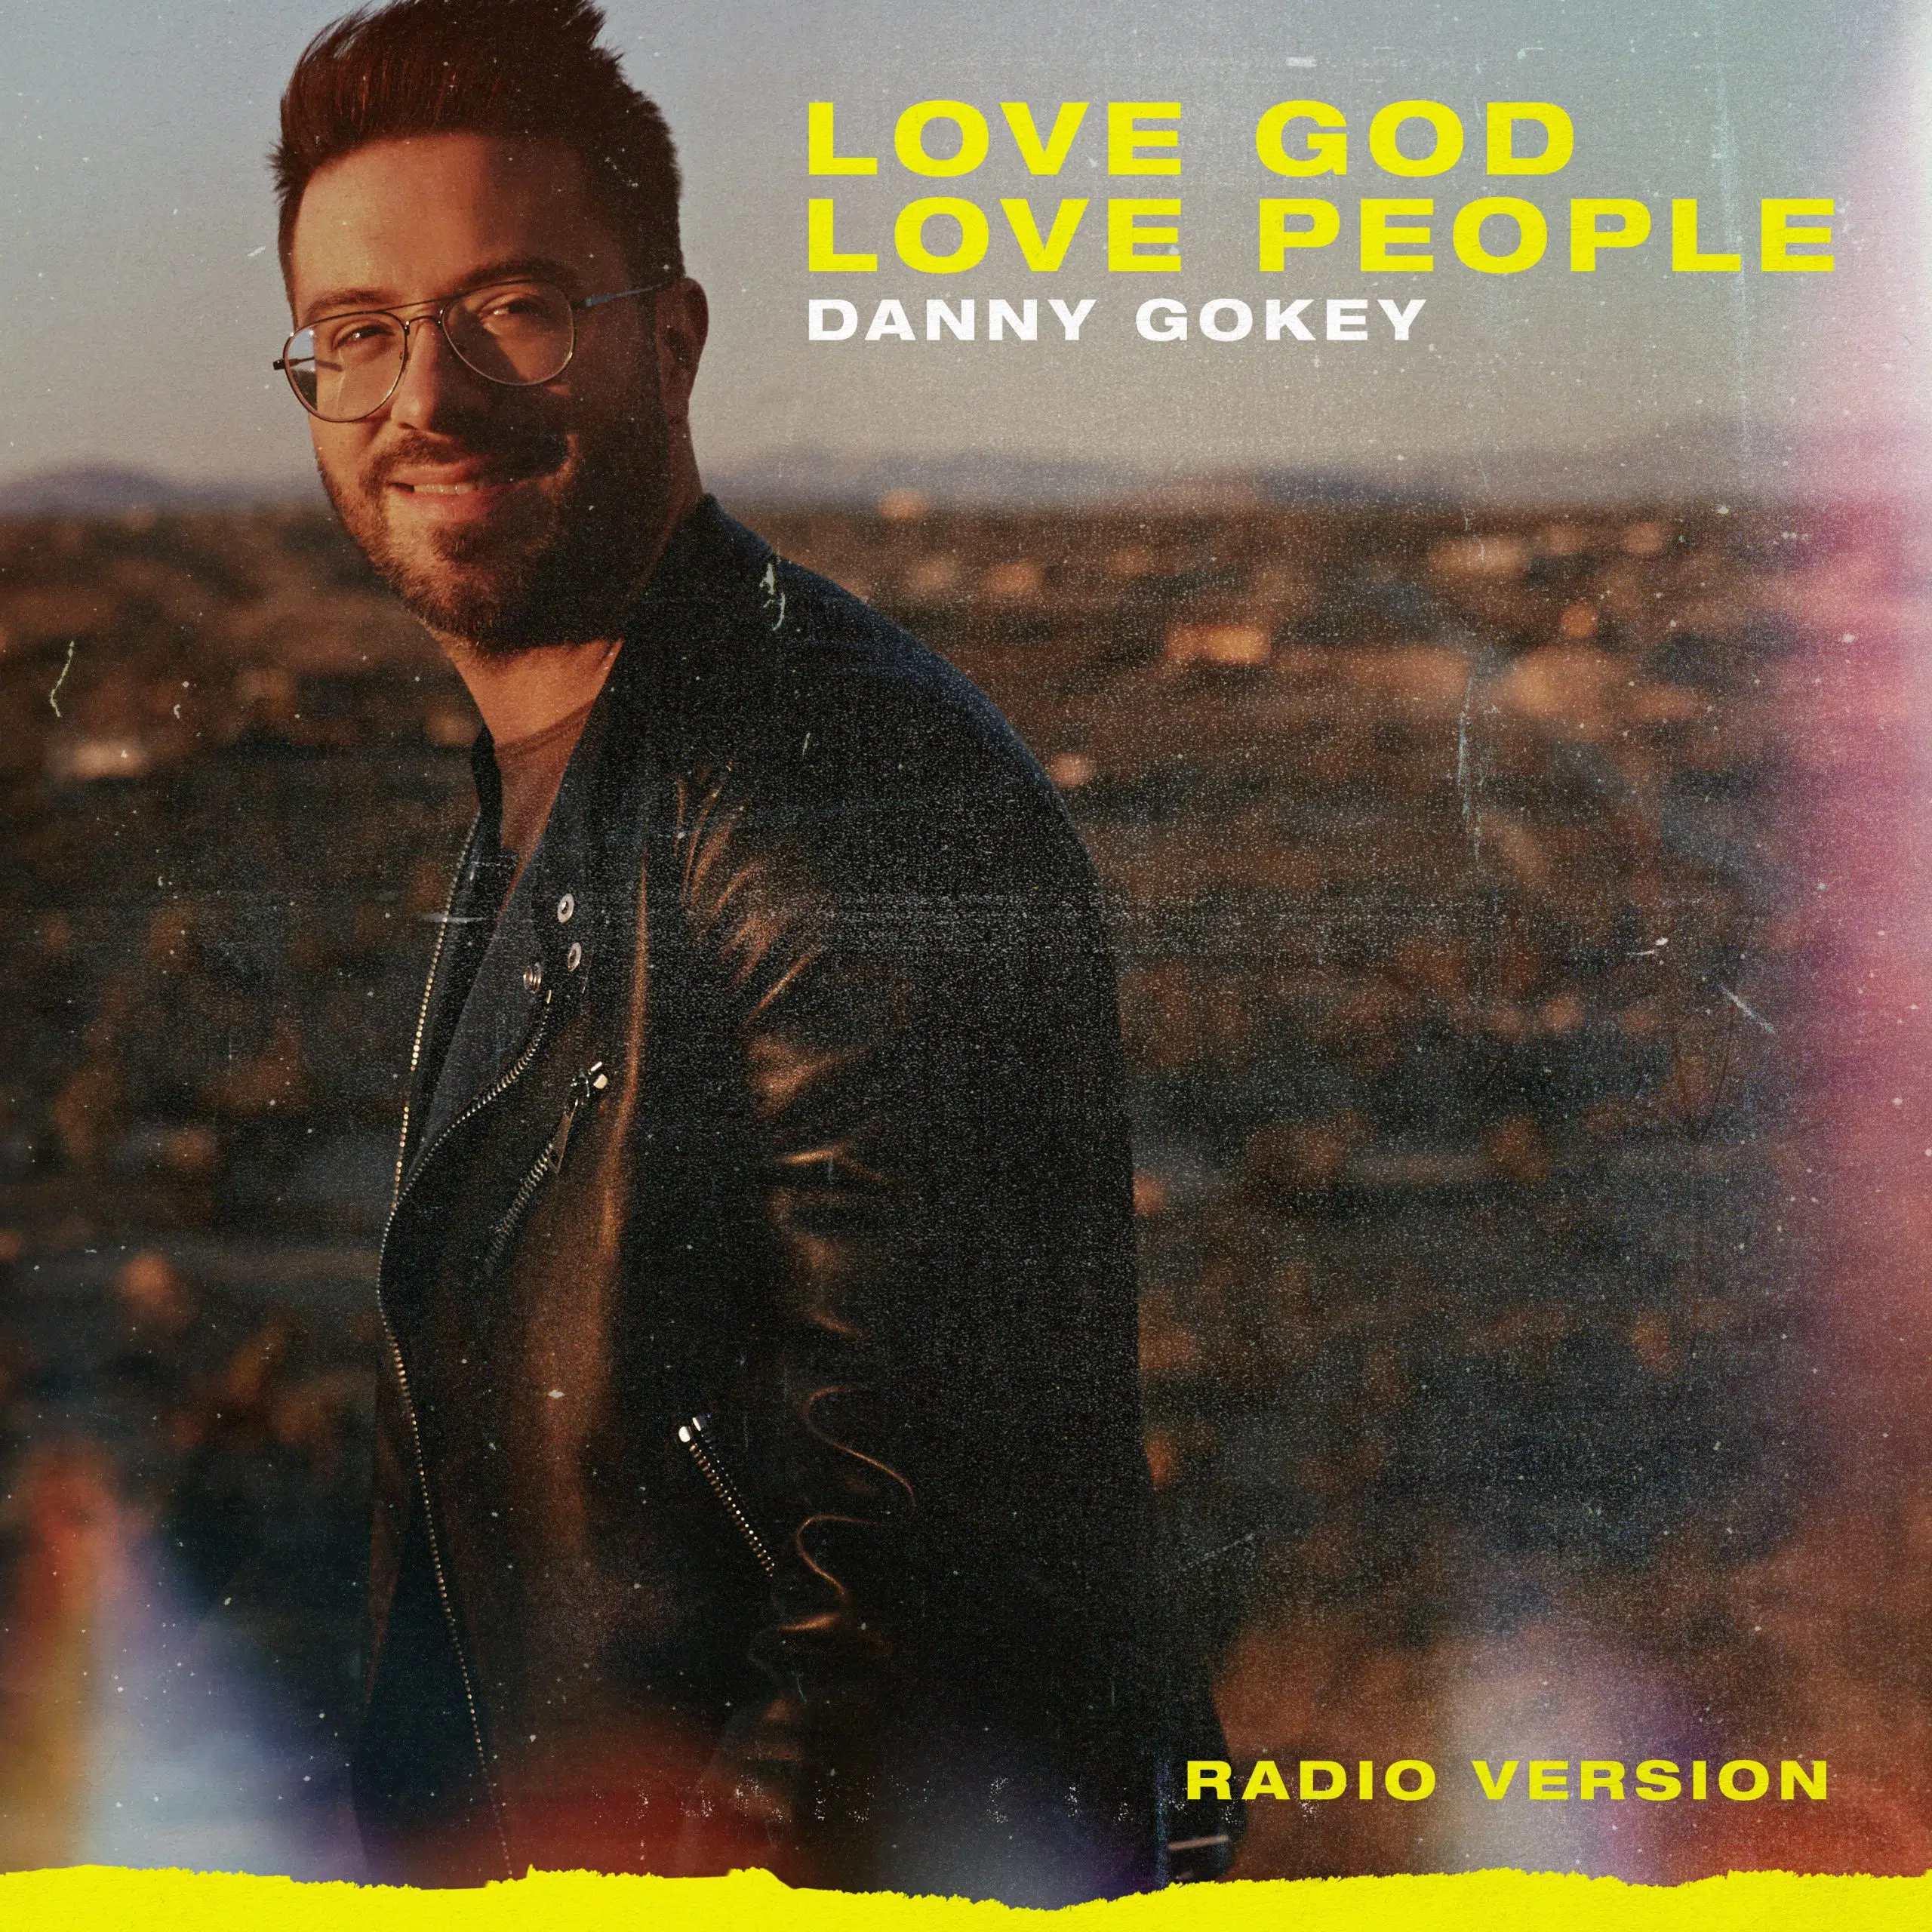 Danny Gokey - Hope During Crisis